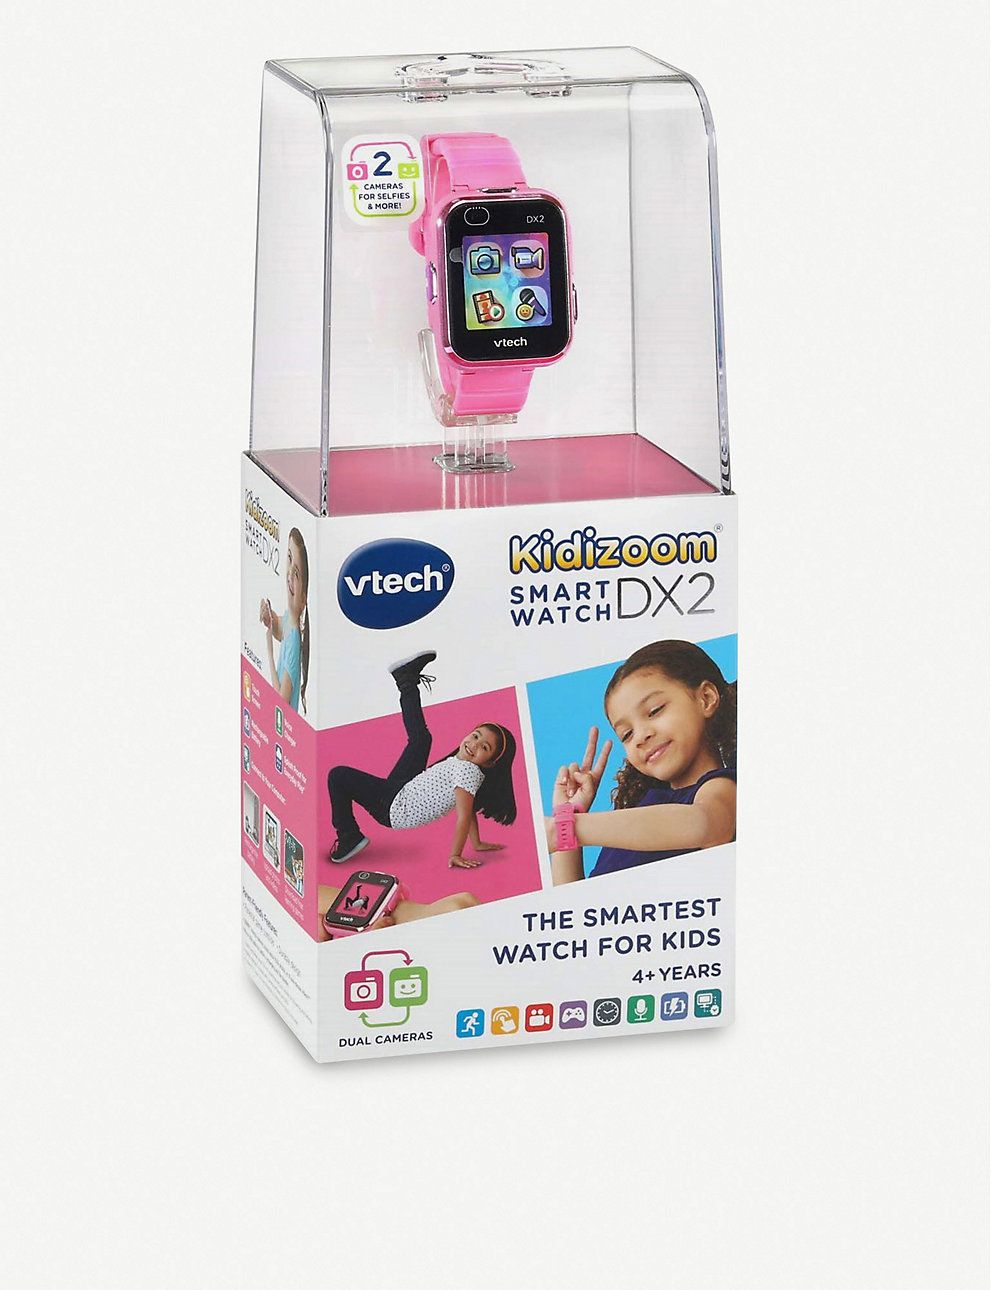 VTECH Kidizoom smart watch DX2 | Selfridges